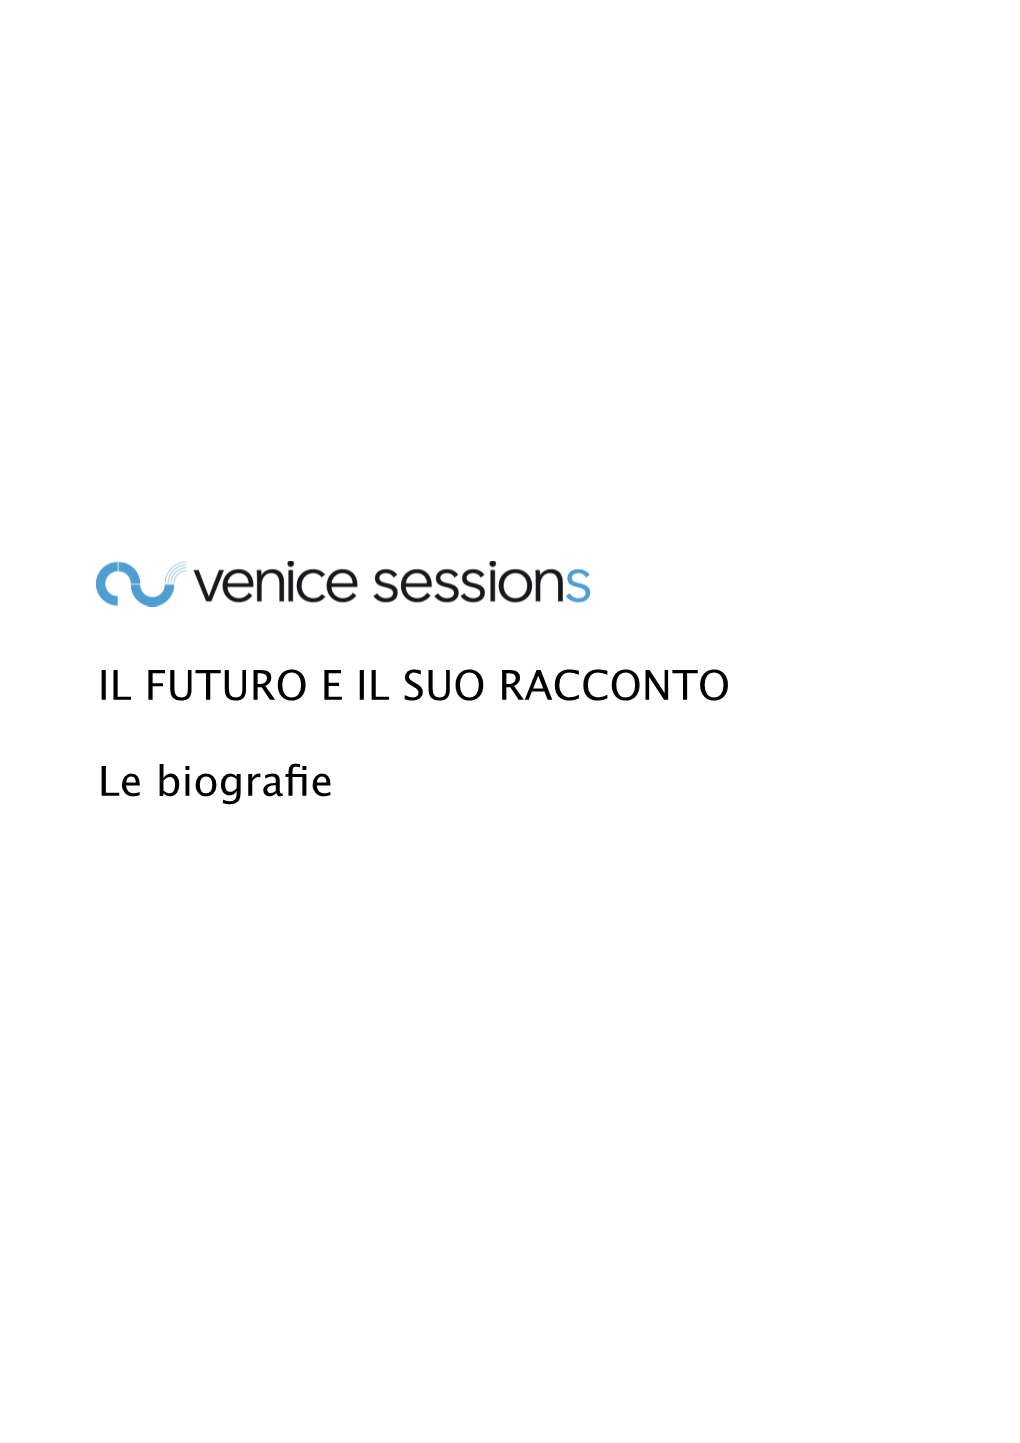 Biografie Venice Session 2